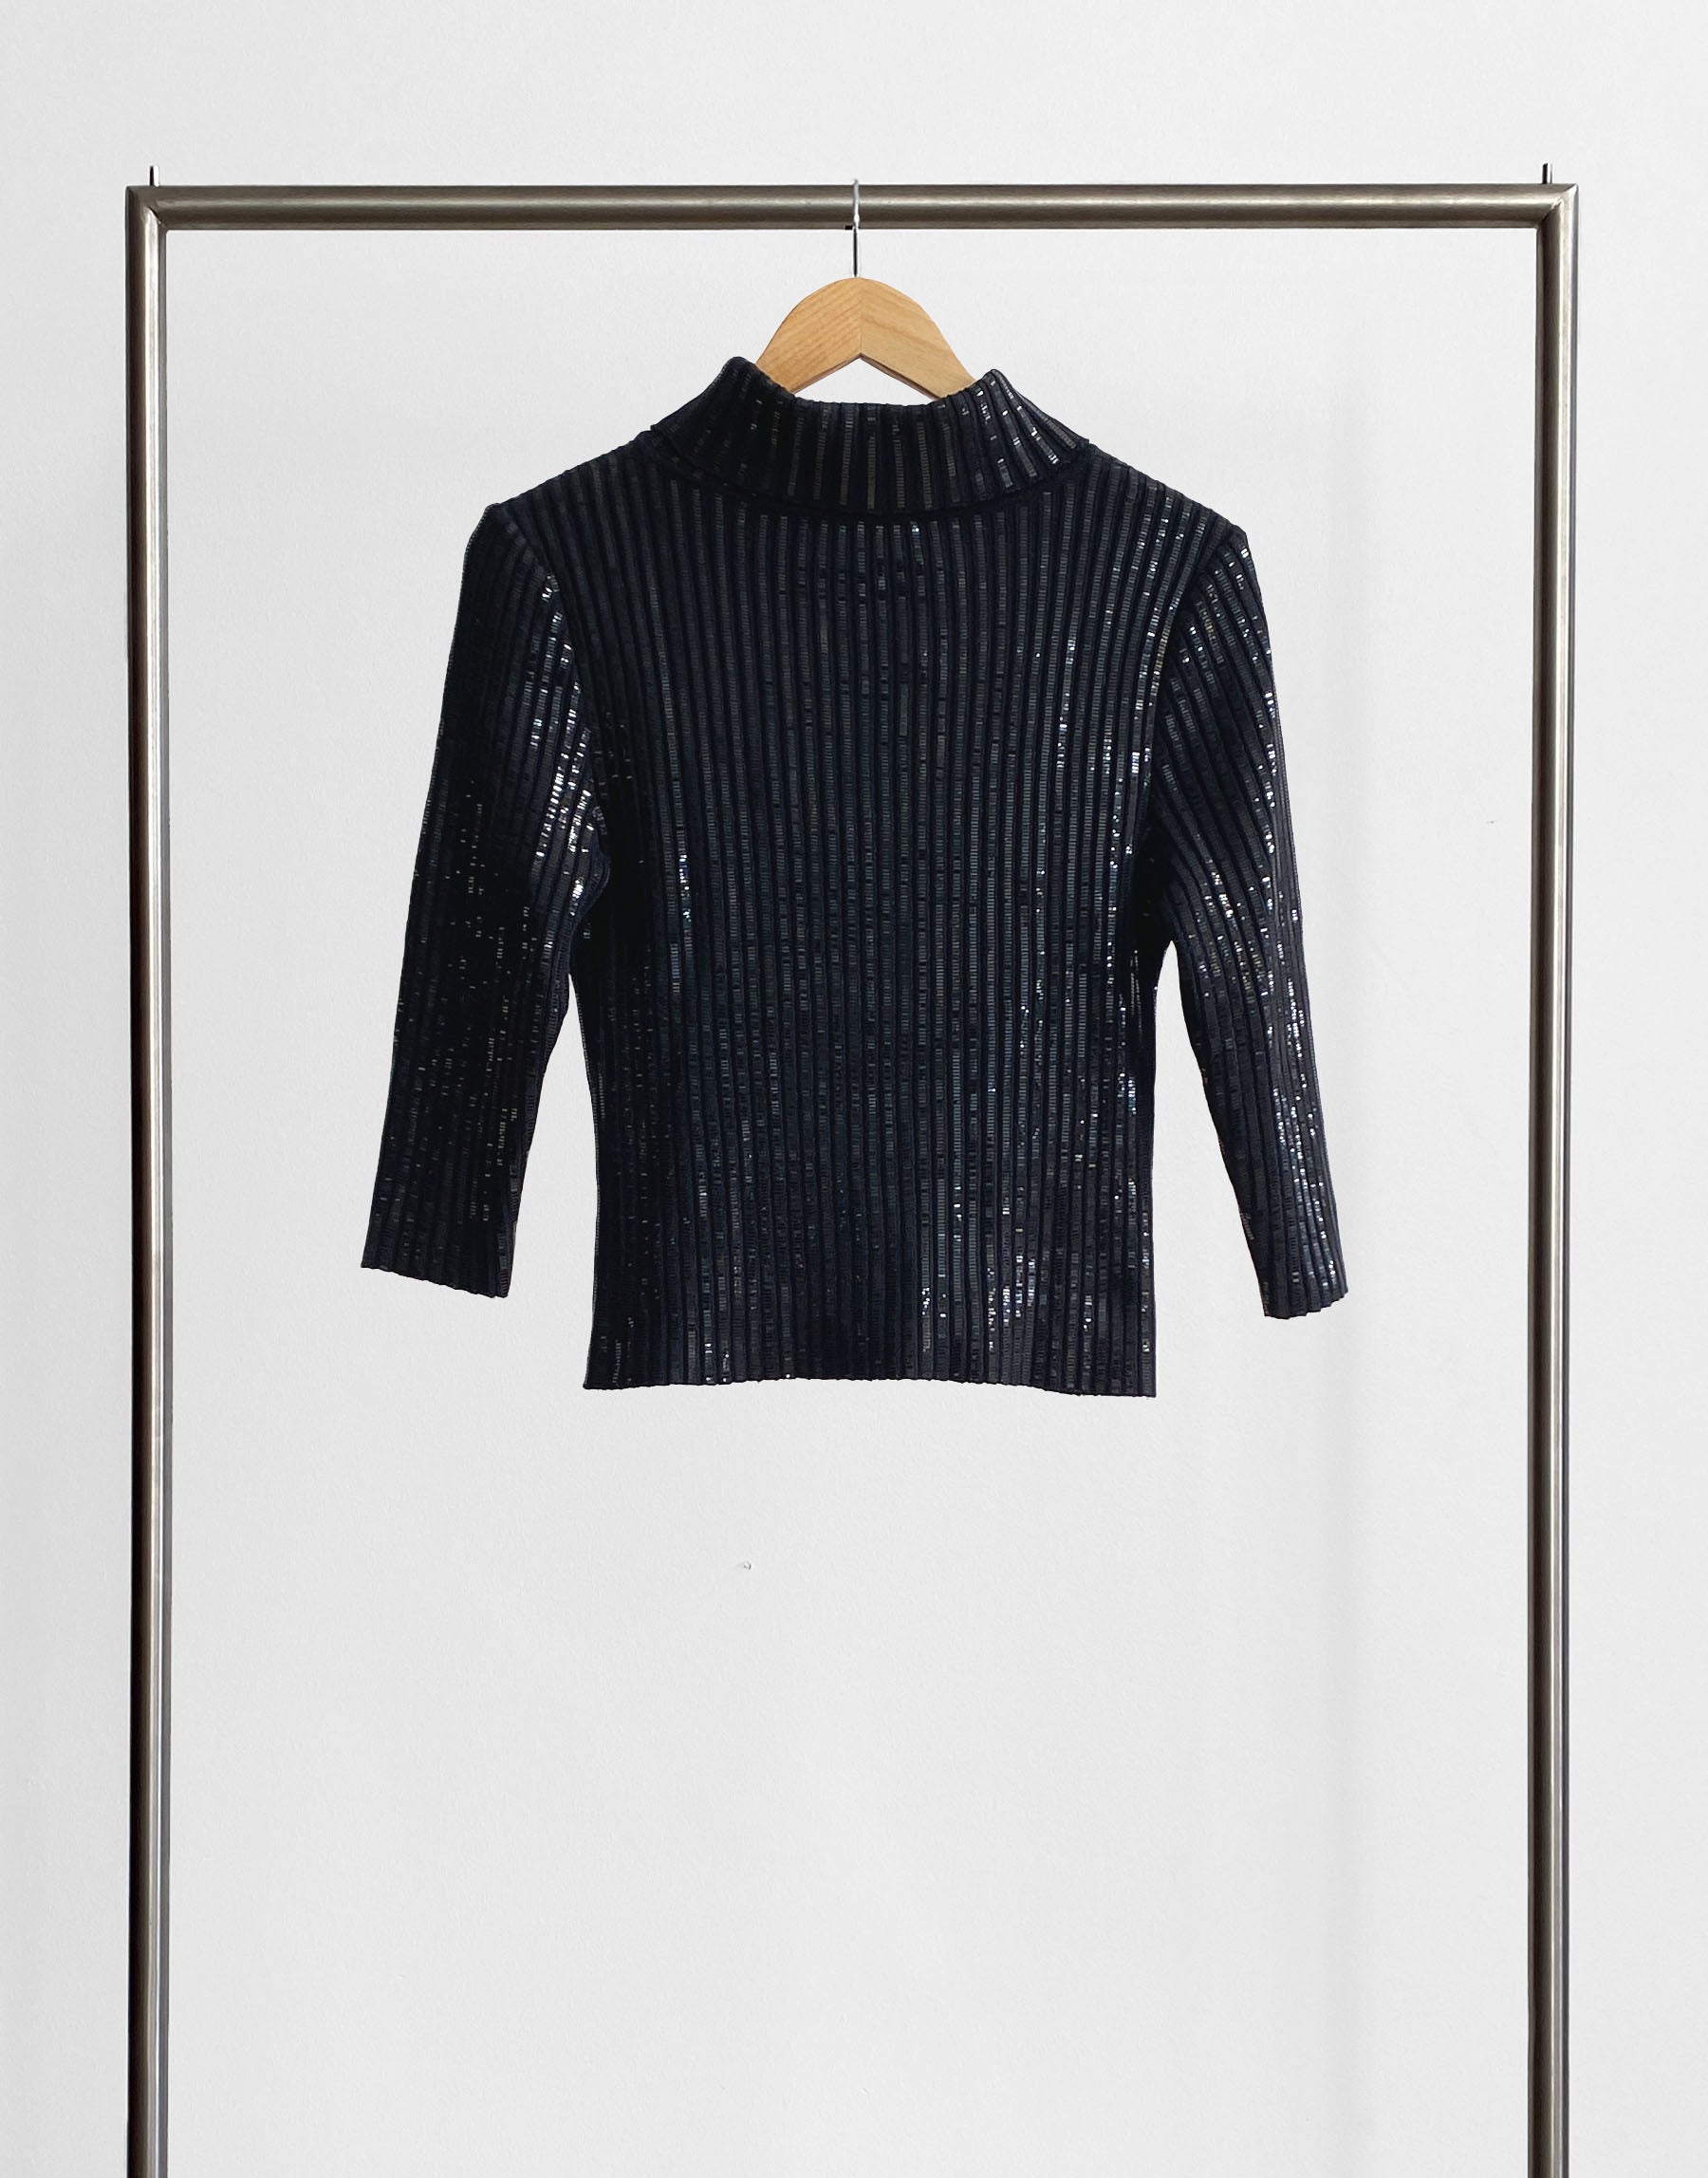 Sequined Black Turtleneck Sweater